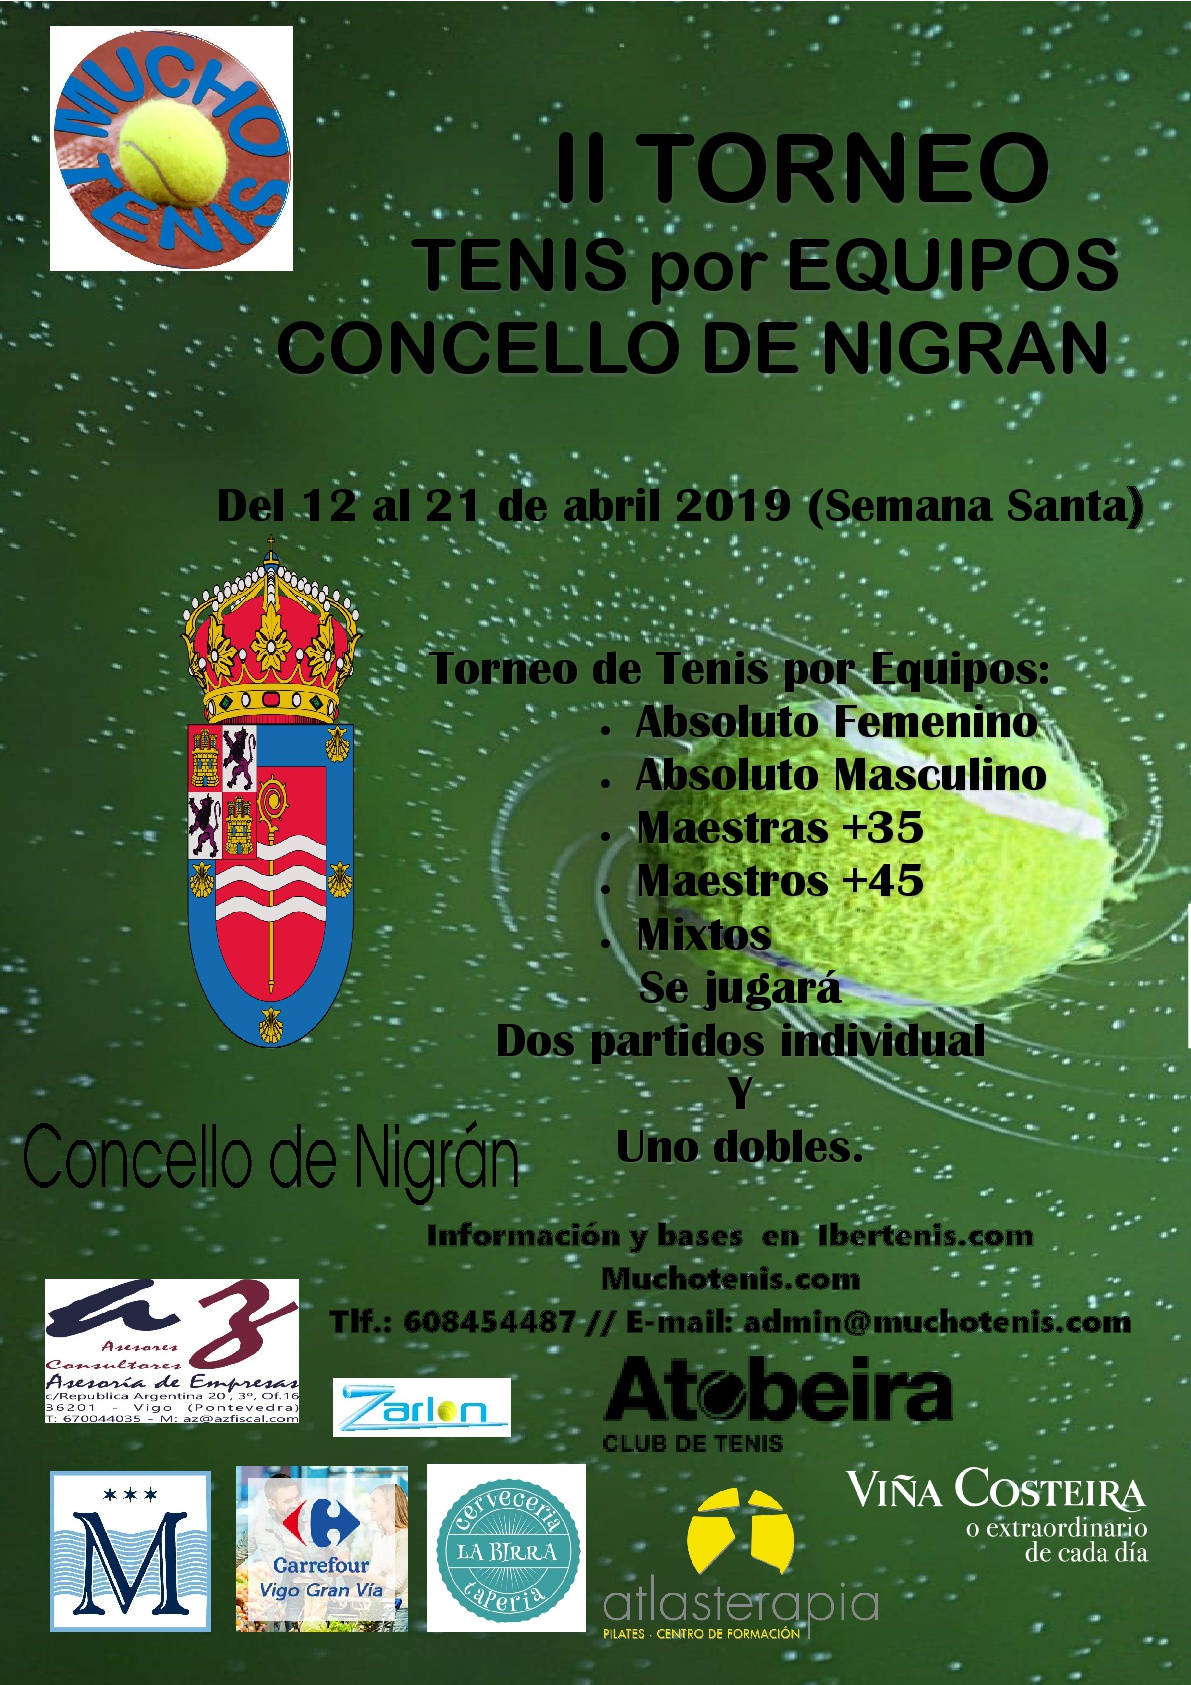 Cartel del 3ª Iber-Champion A Tobeira / II Torneo de tenis por Equipos Concello de Nigran